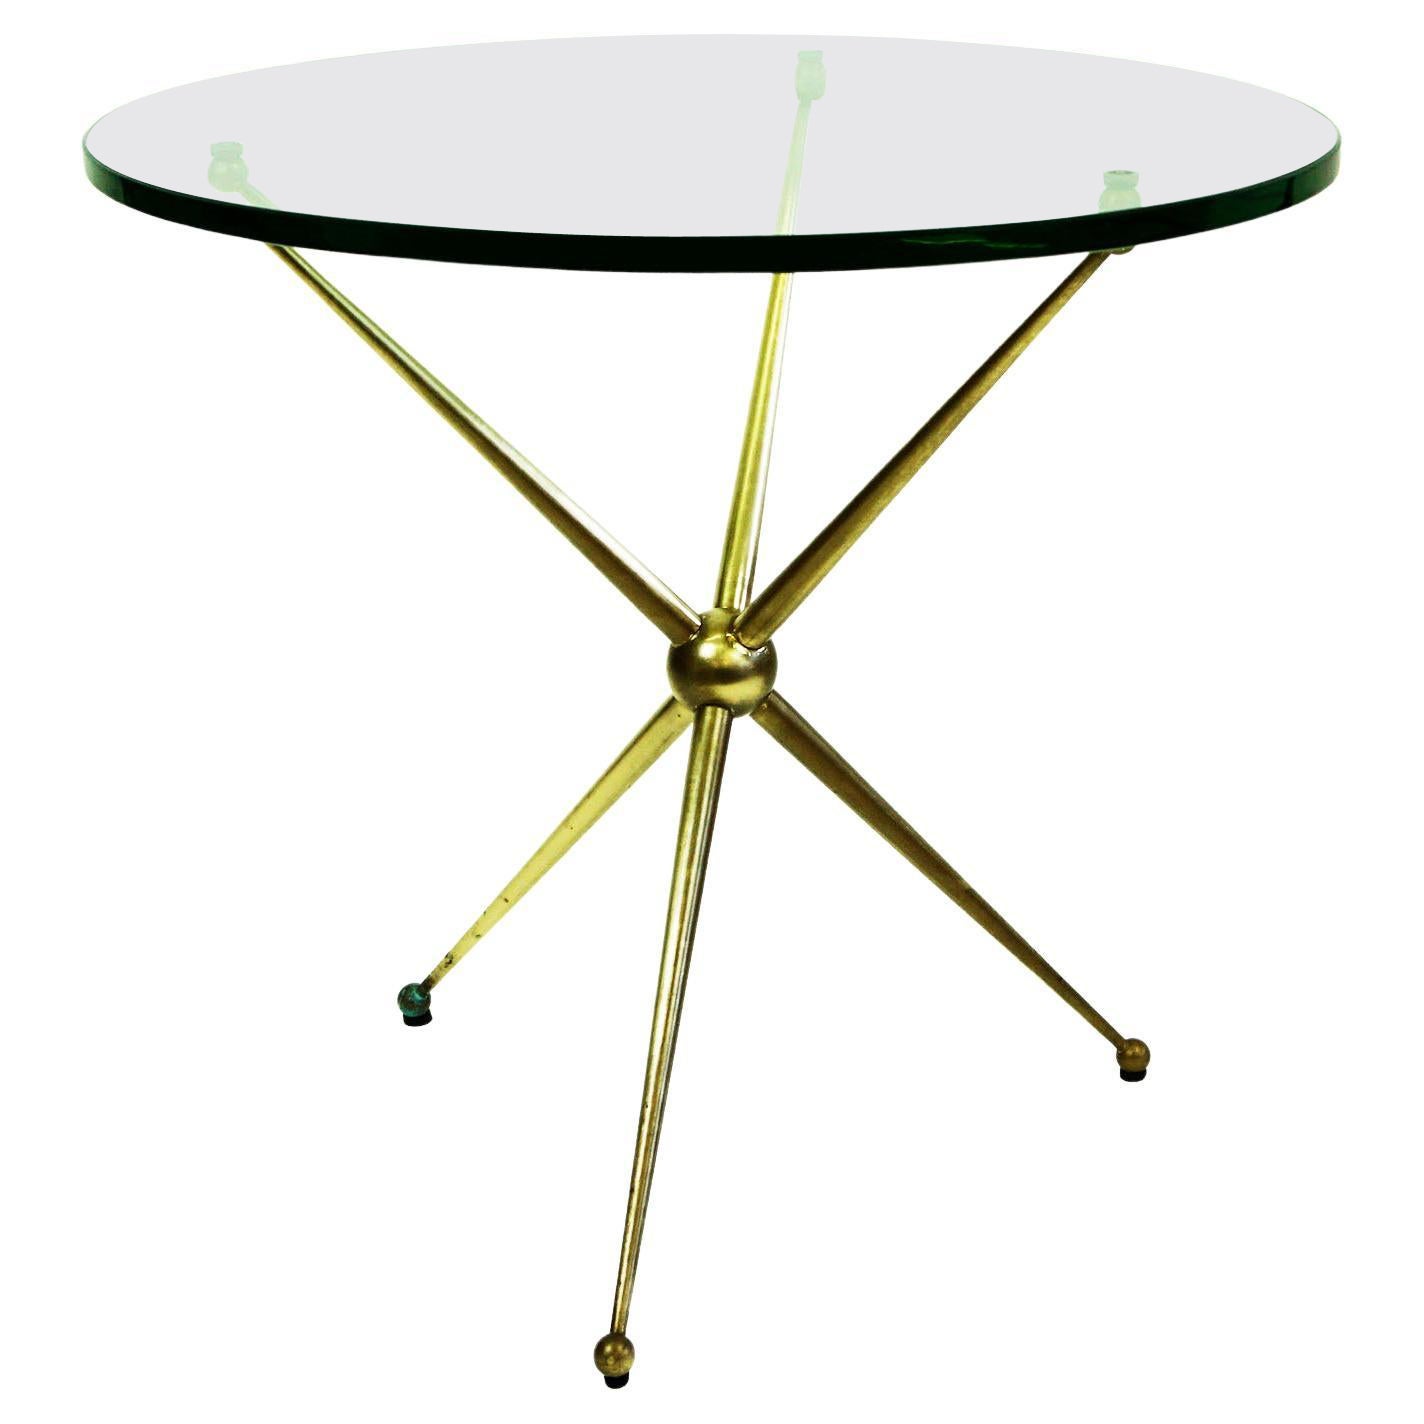 Circular Italian Midcentury Brass and Glass Coffee Table